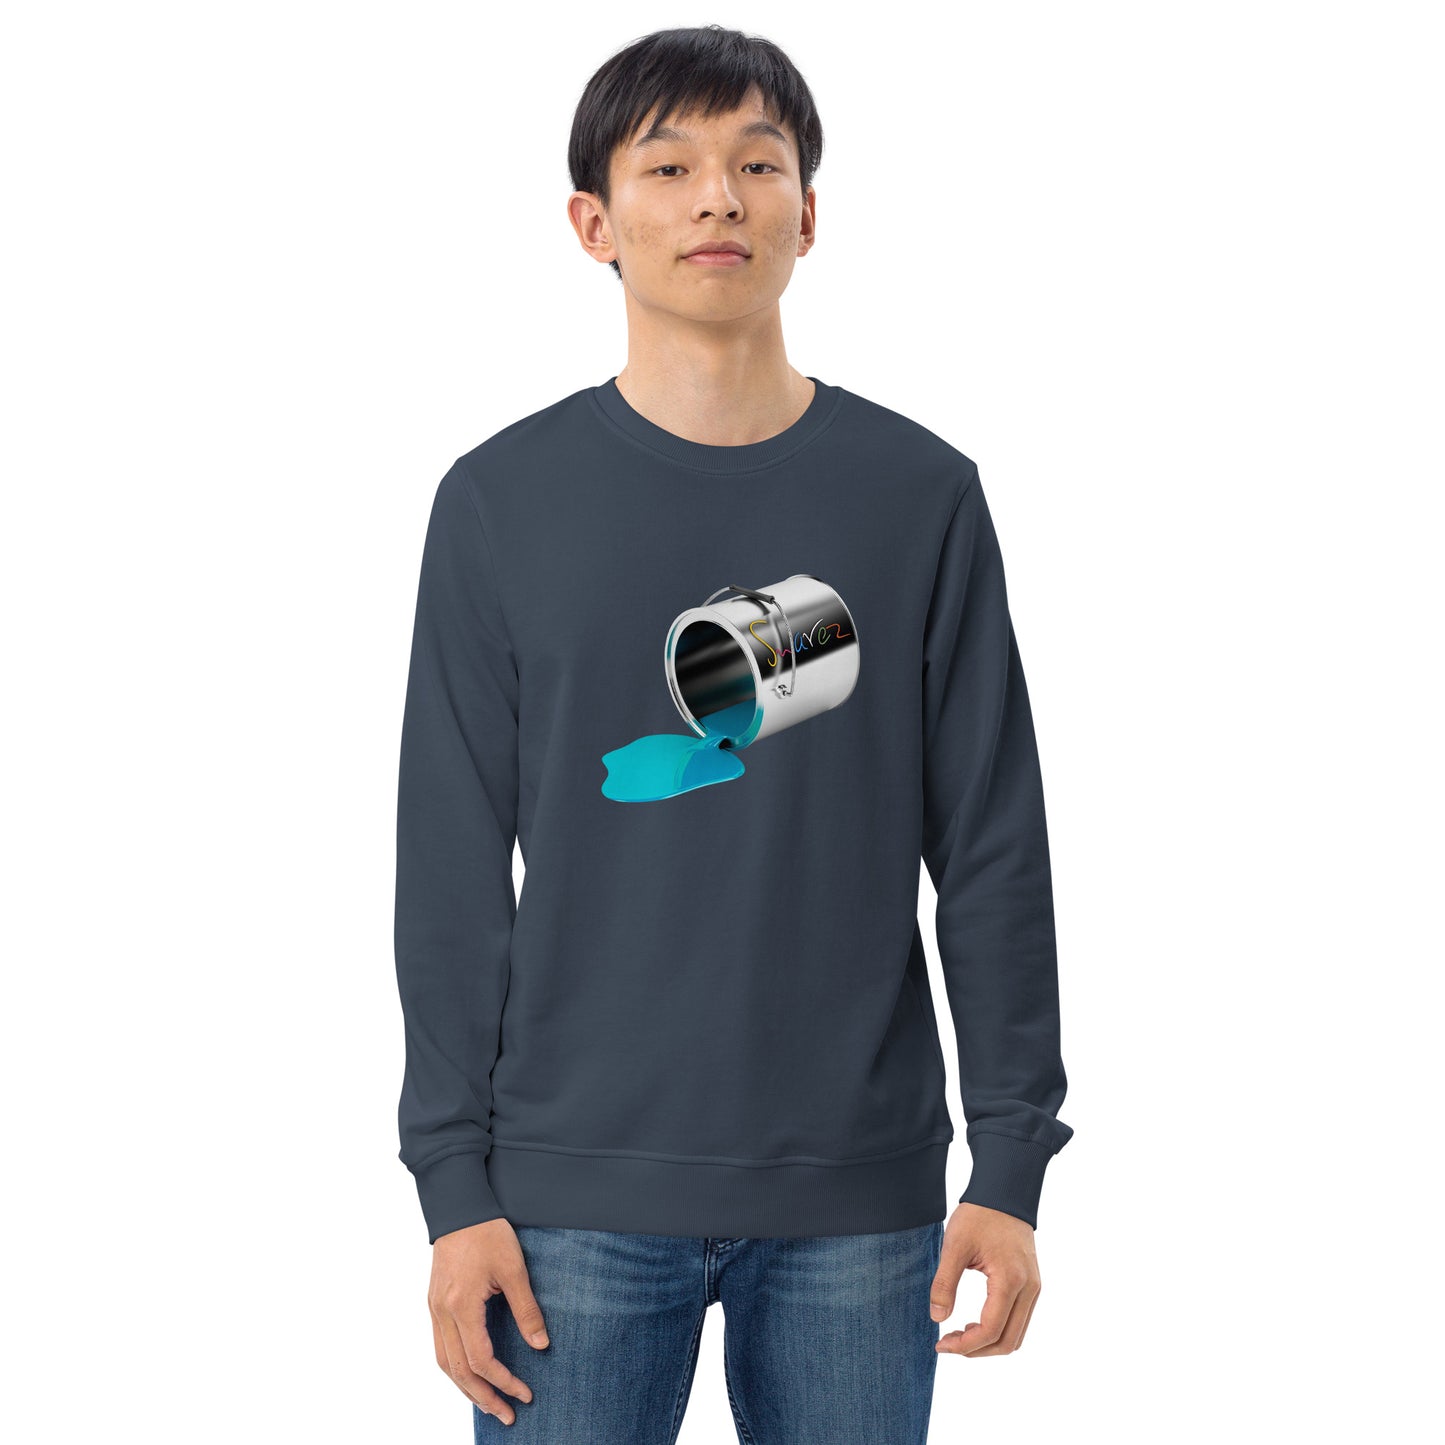 Unisex organic sweatshirt - Spilt paint design